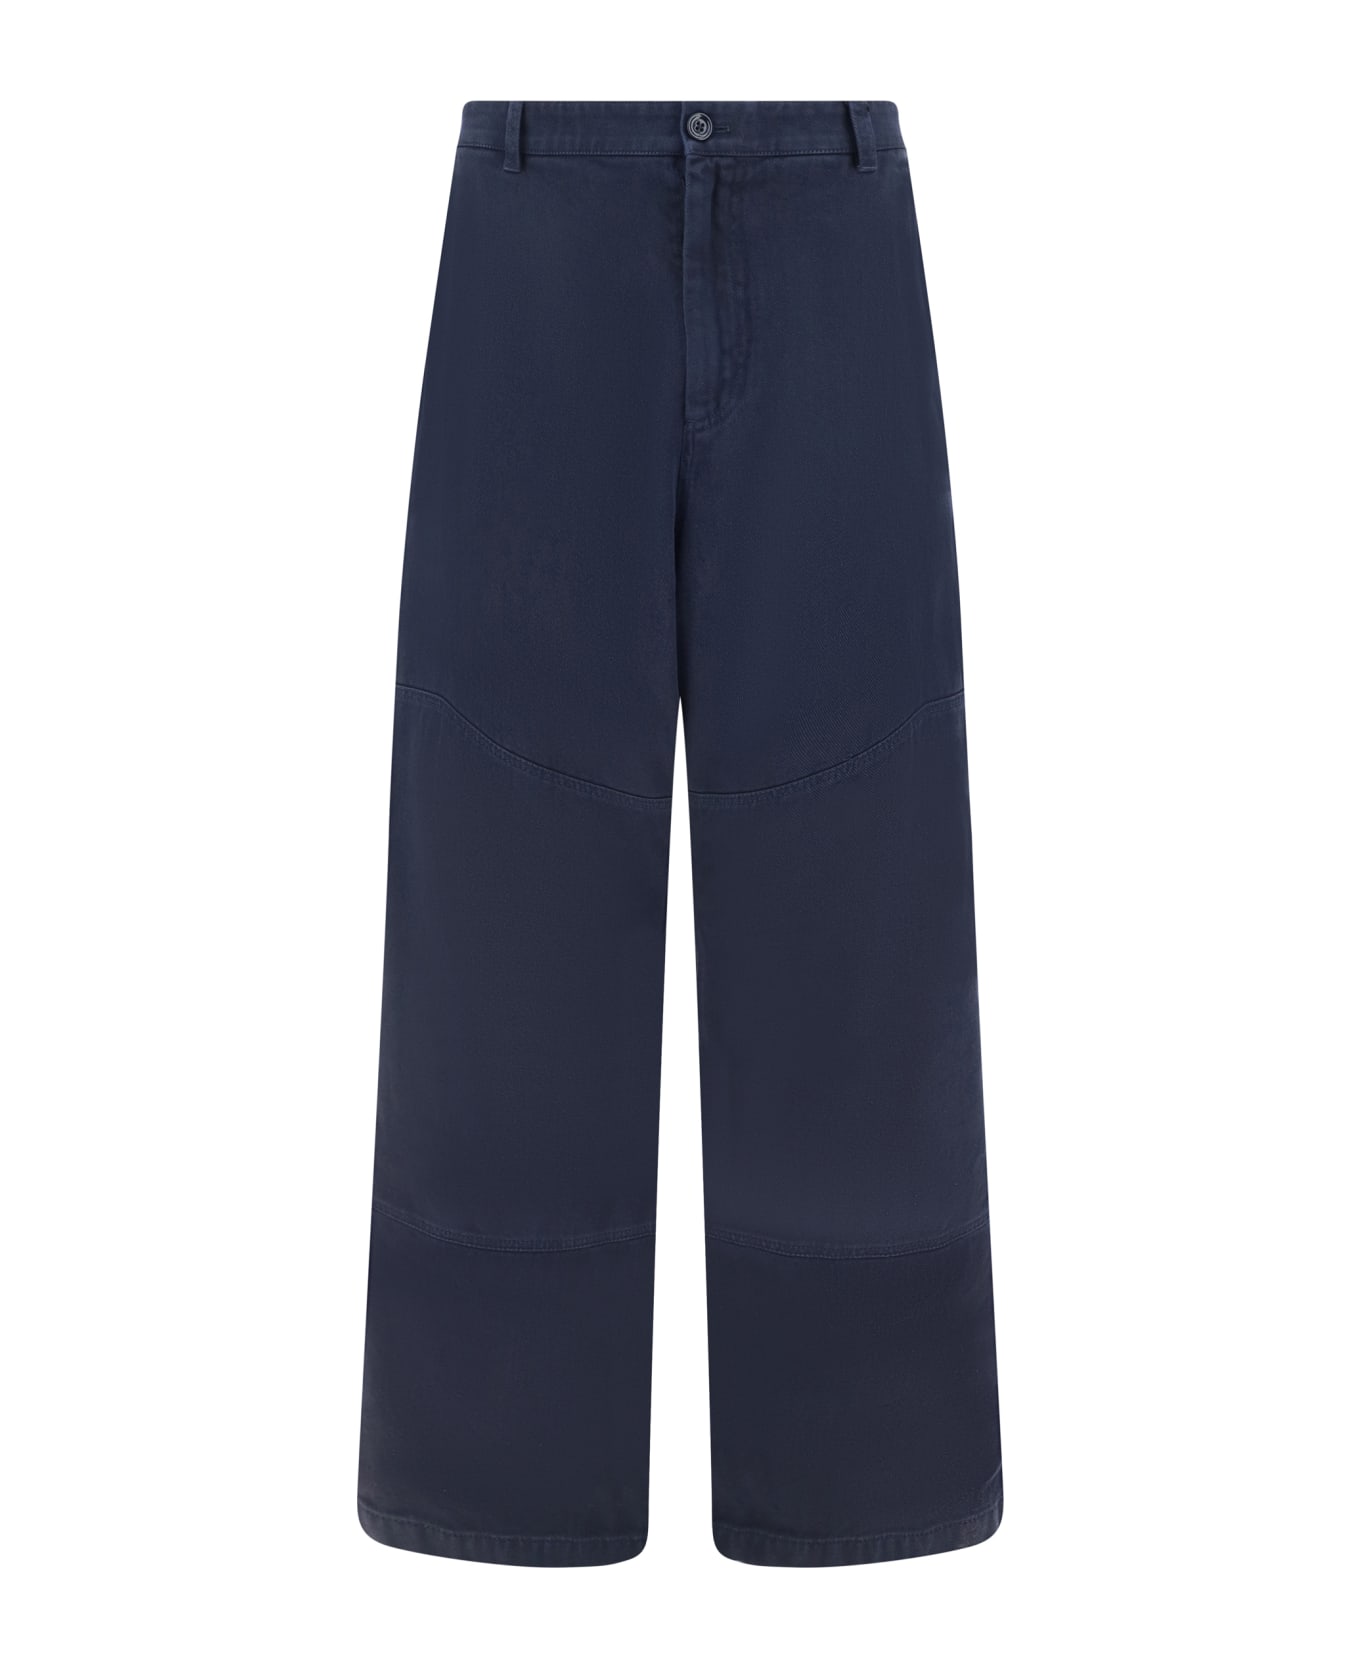 Dolce & Gabbana Cargo Pants - Blu Scurissimo 1